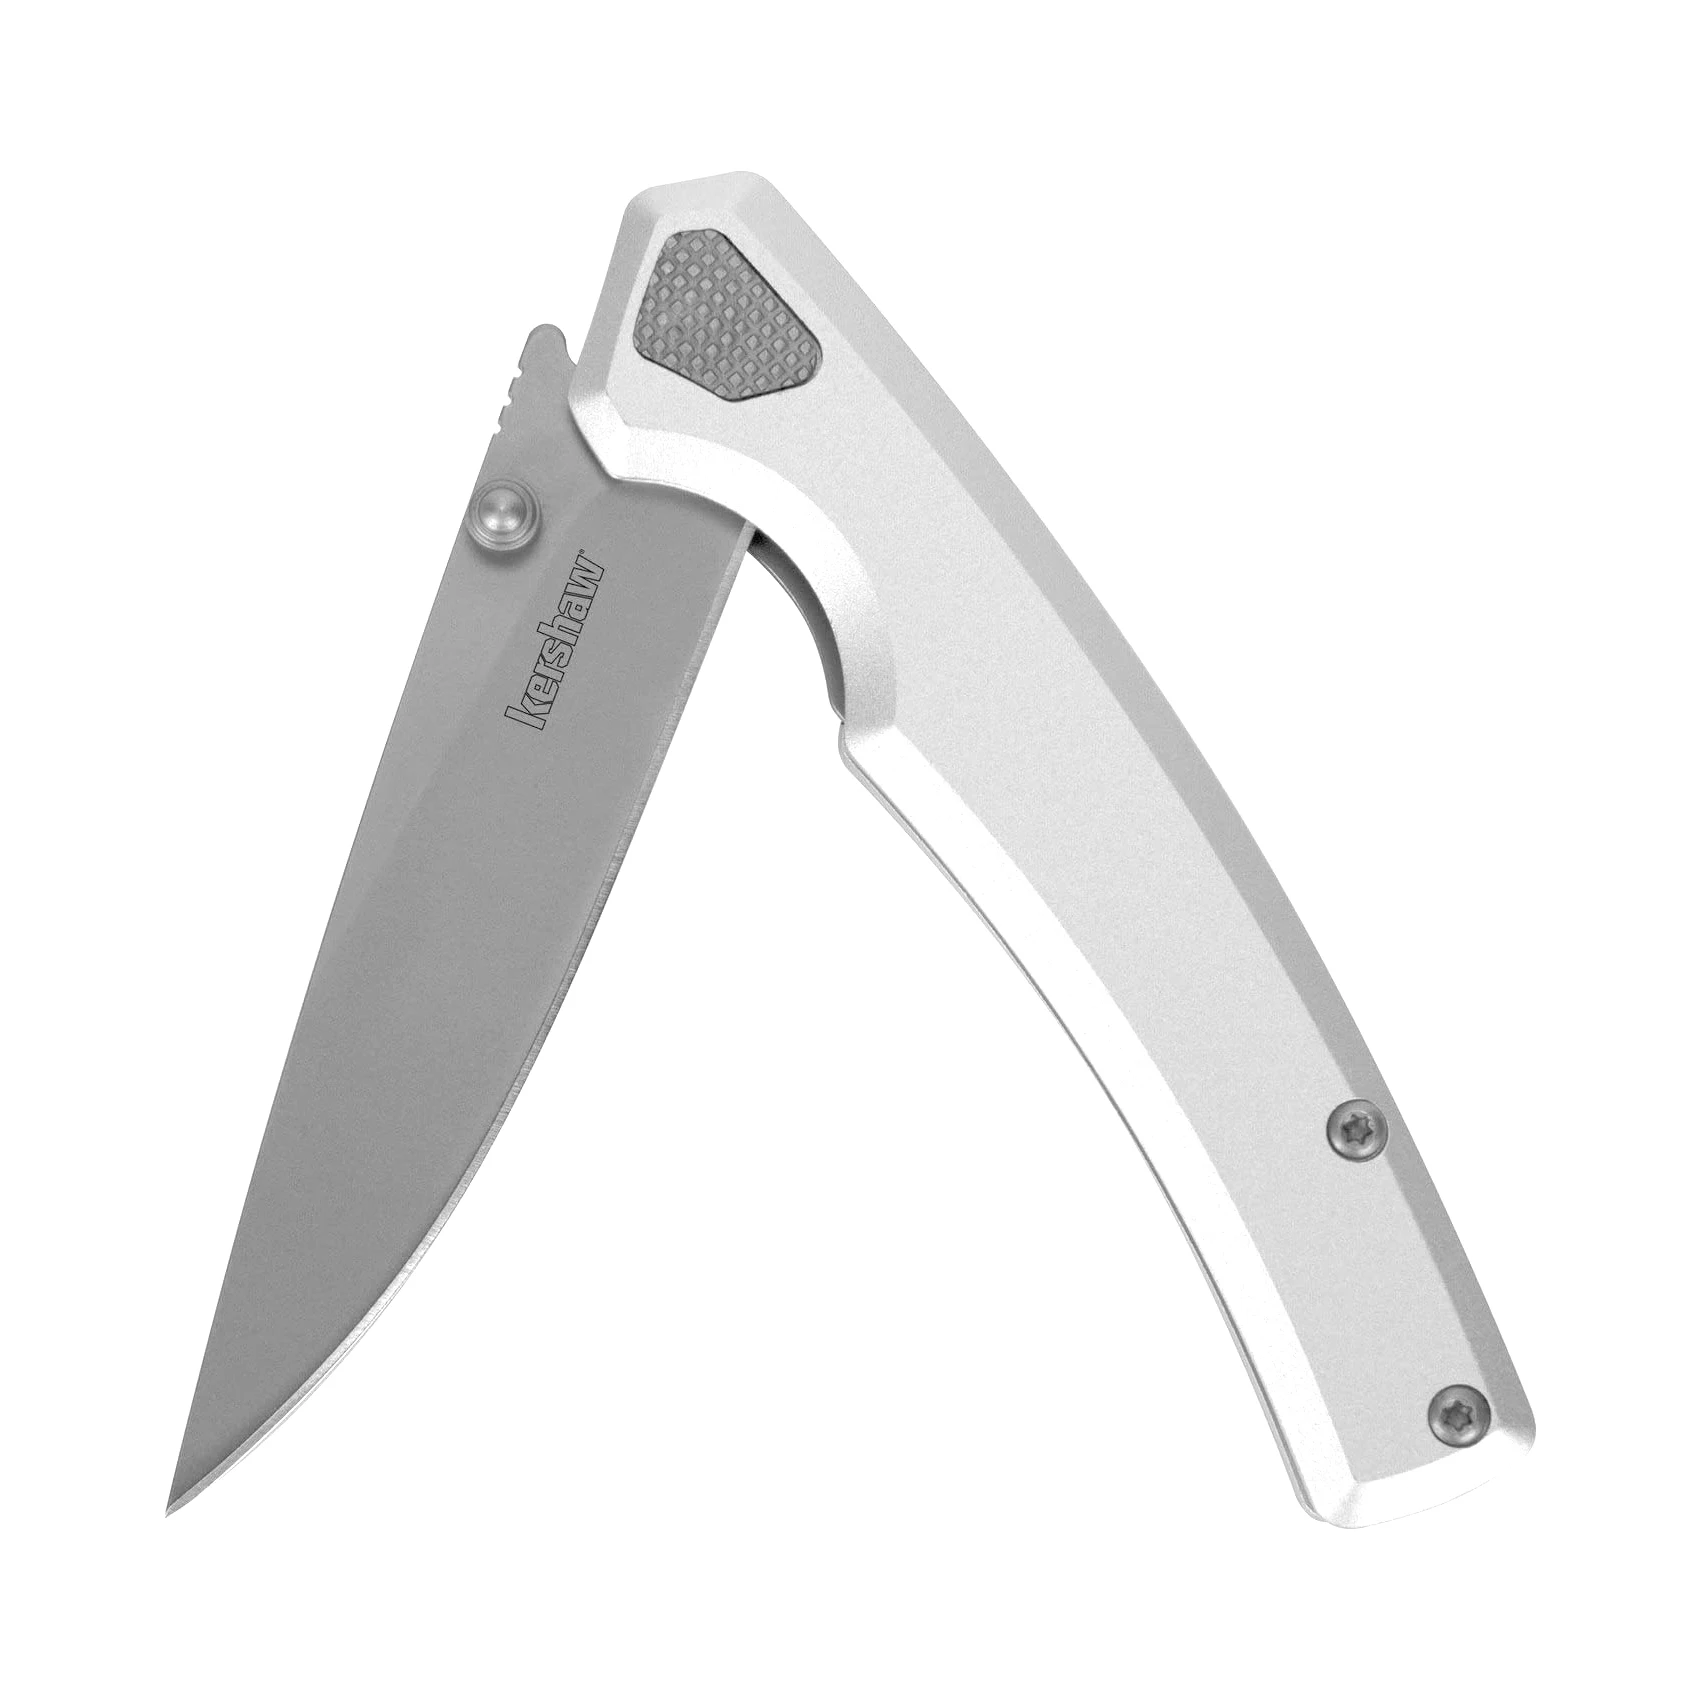 

Kershaw 2131 Pocket Outdoor Camping Fold Knife 8CR13 Blade Aviation Aluminum Handle Hunting Survival Tactical Knives EDC Tools